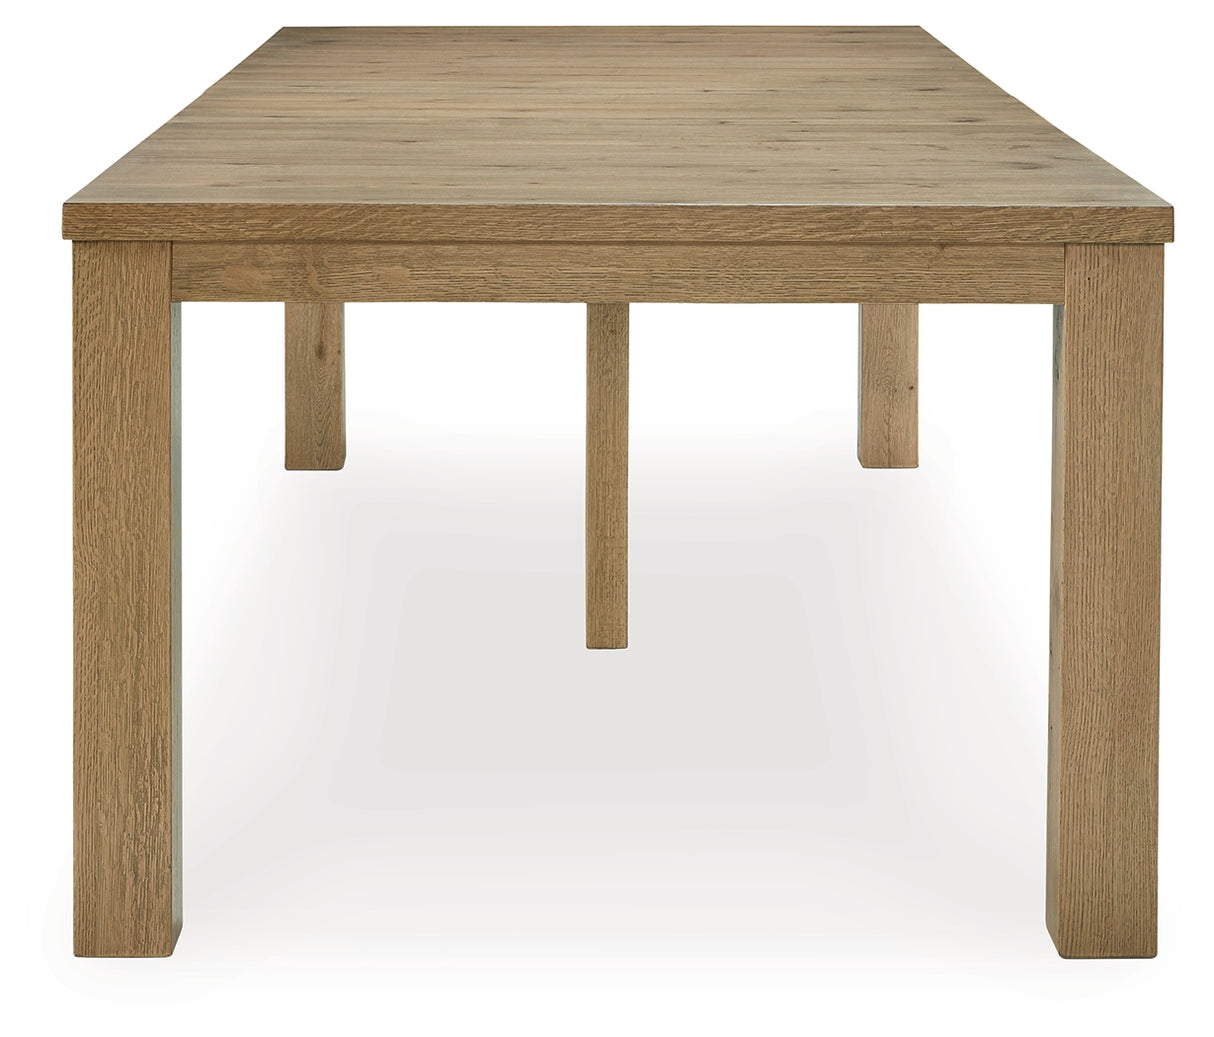 Galliden Light Brown Dining Extension Table - D841-35 - Luna Furniture